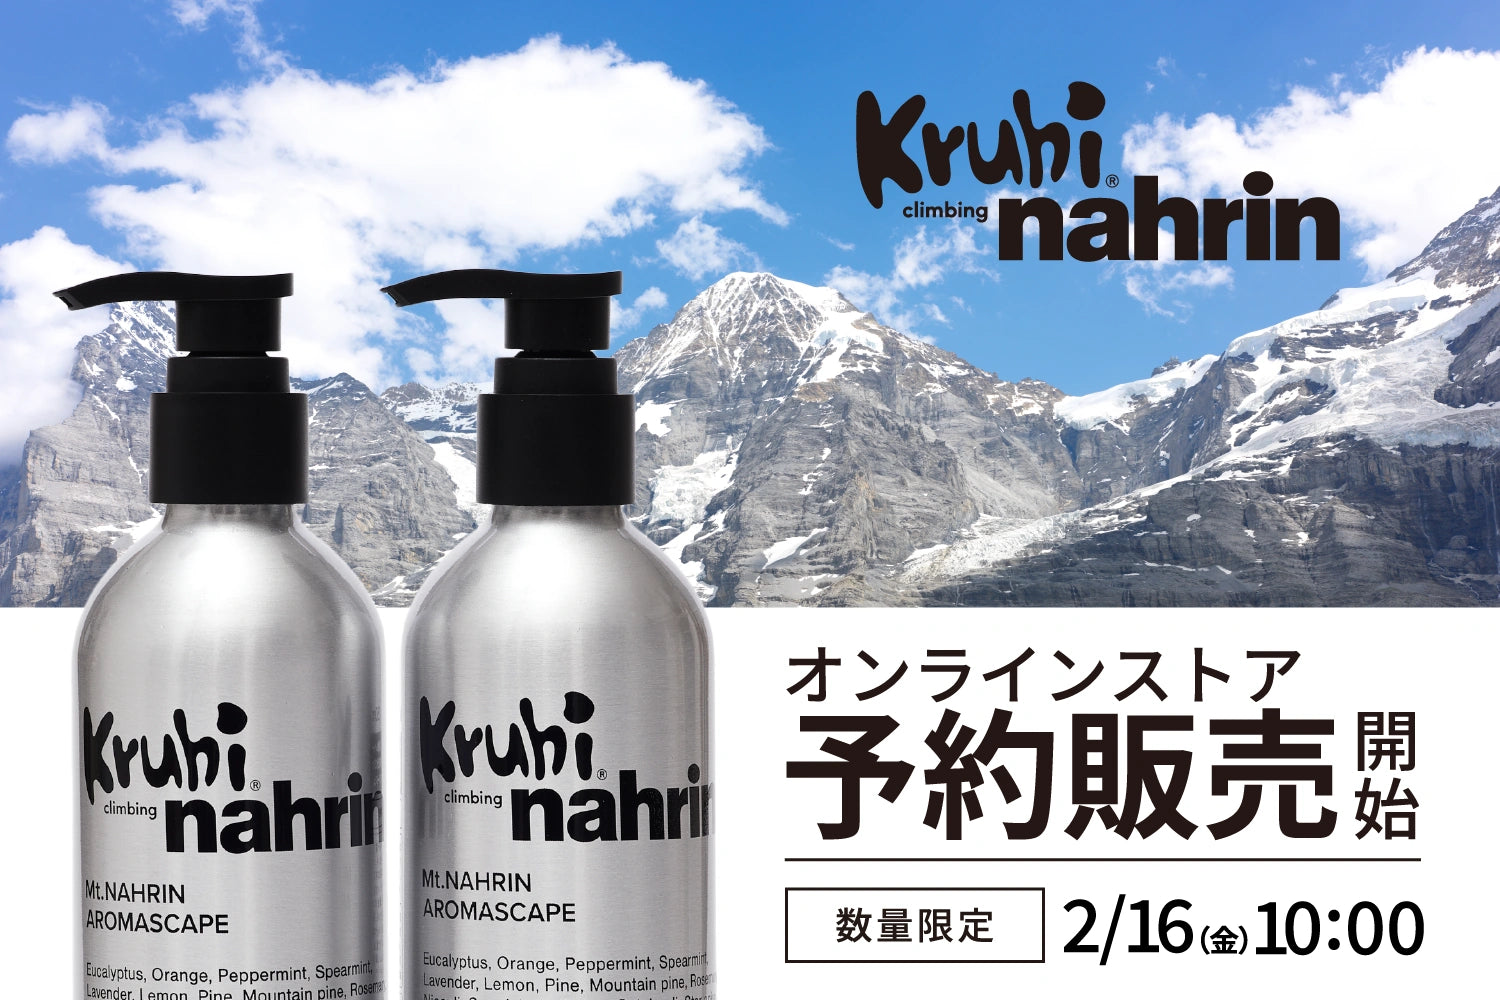 Kruhi climbing nahrin 2/16 10:00より予約販売開始 – Kruhiオンライン 